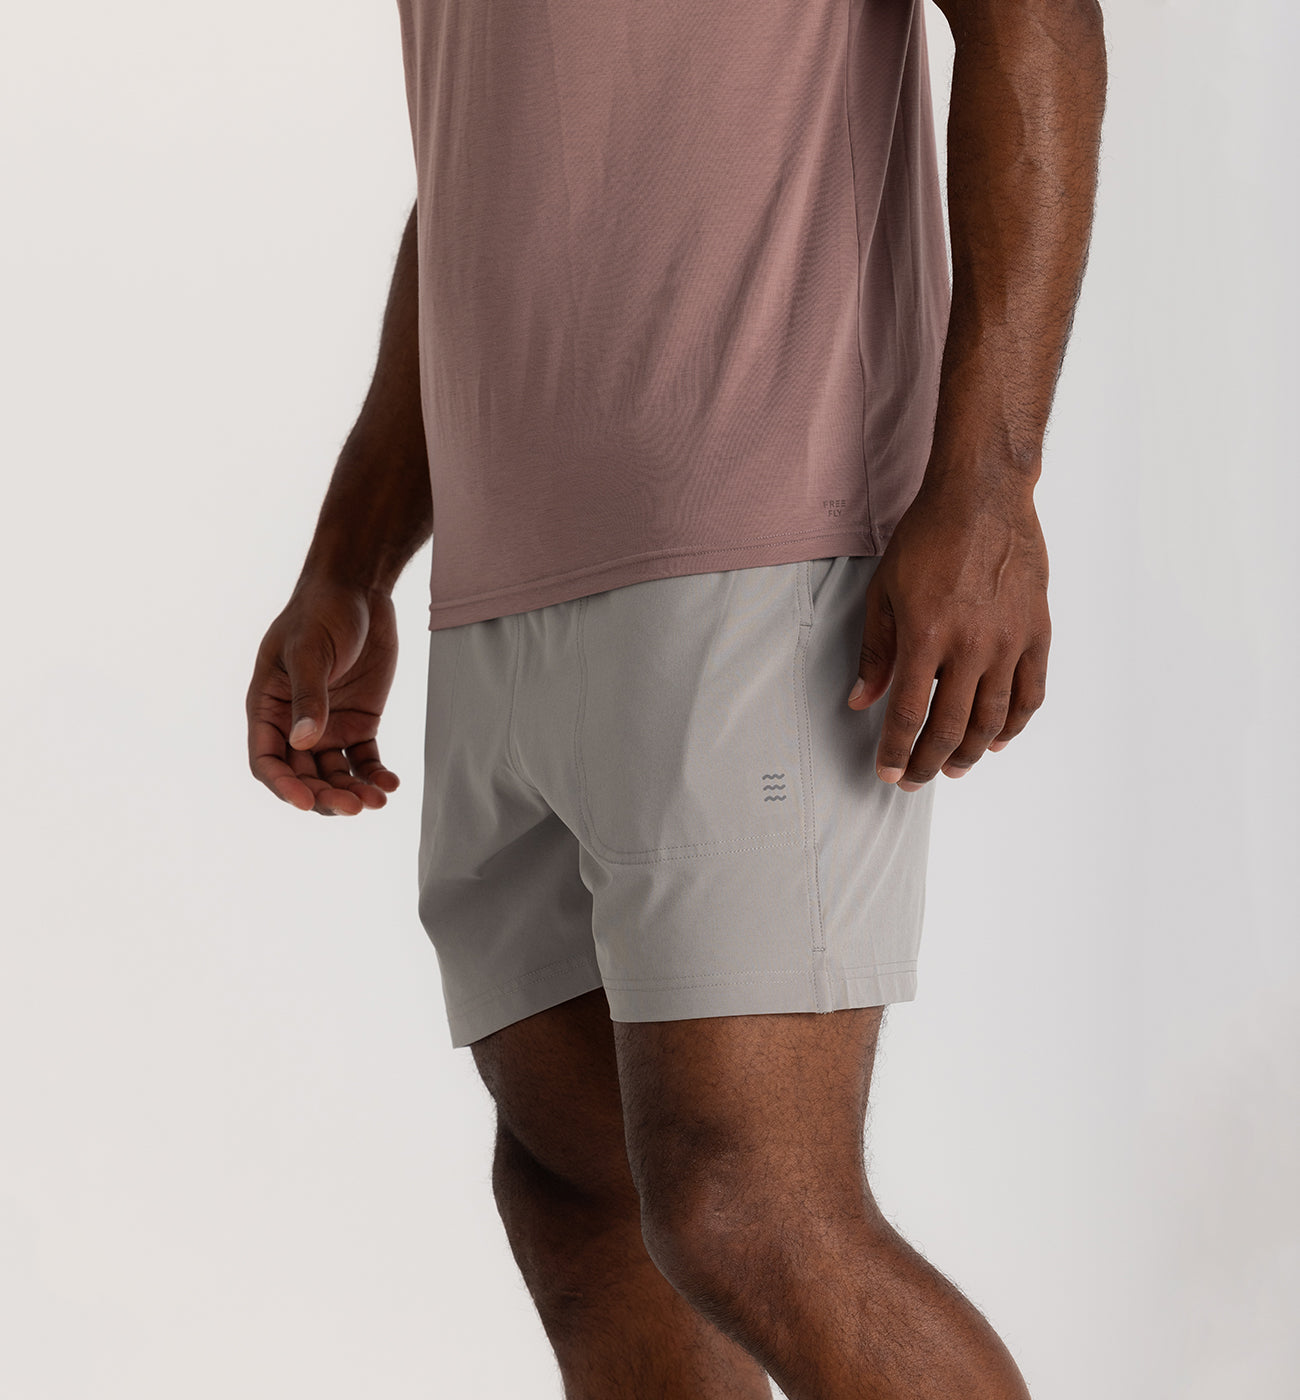 Ultra minimal bamboo liner shorts with protective shell